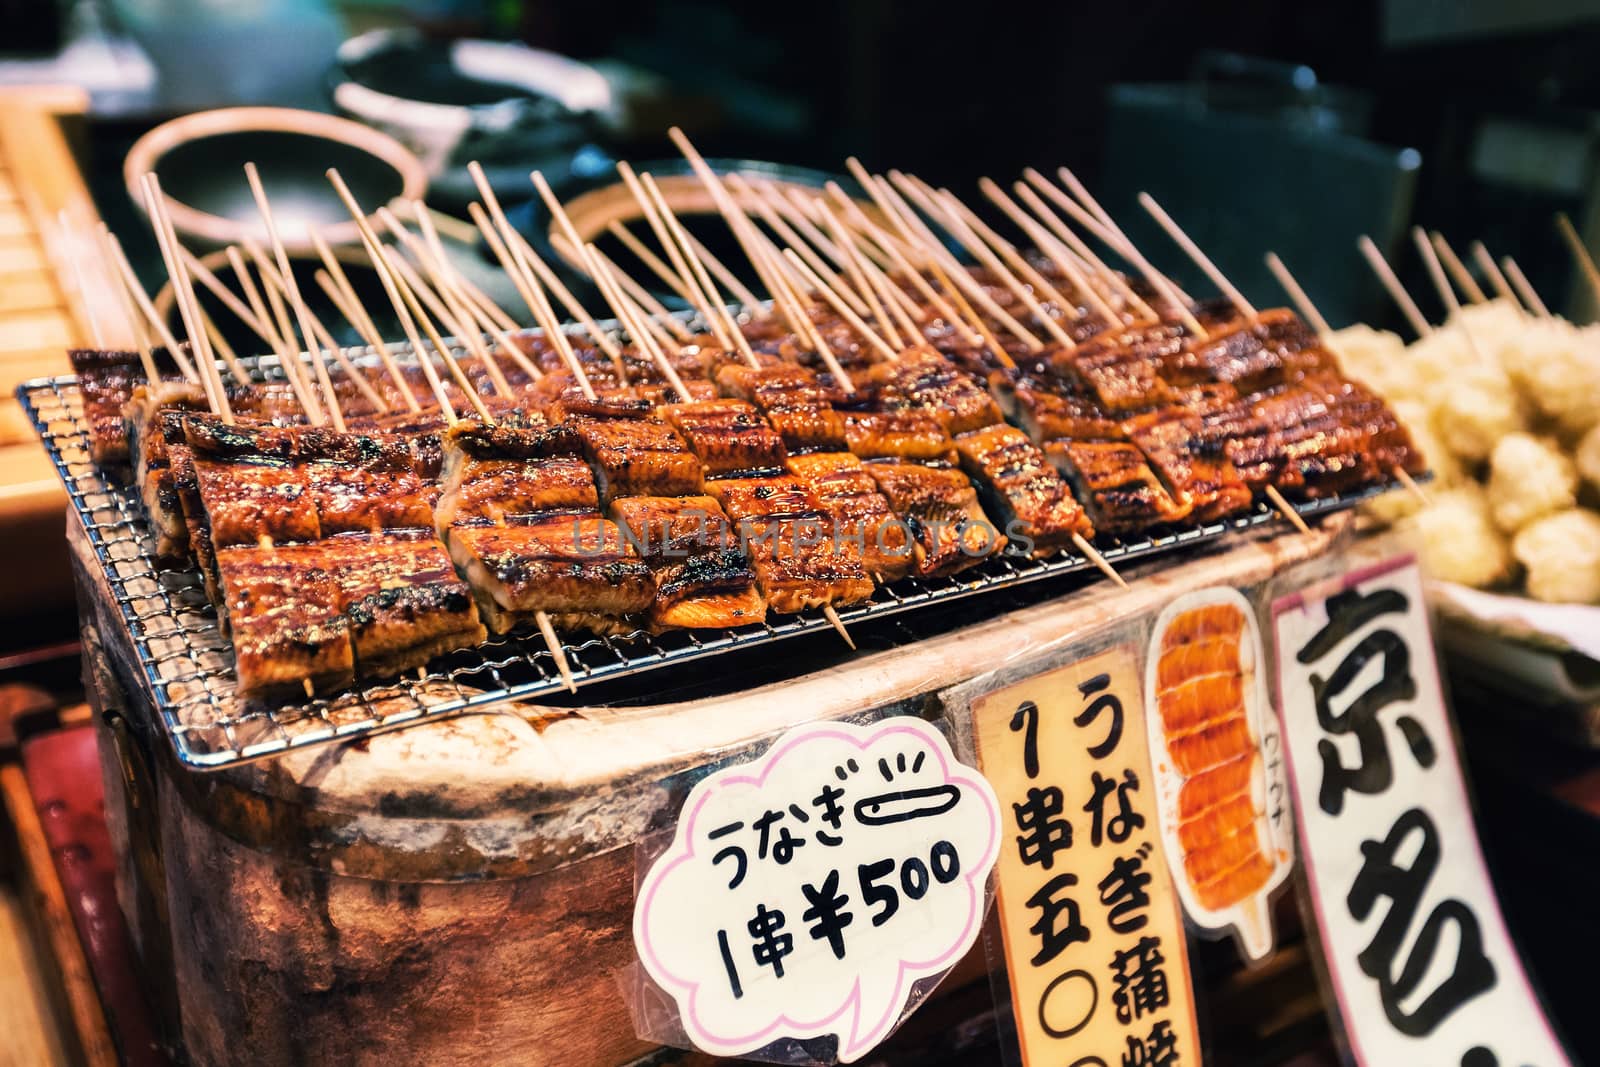 Grilled unagi or fresh water eel on sticks as street food at Nishiki market in Kyoto, Japan